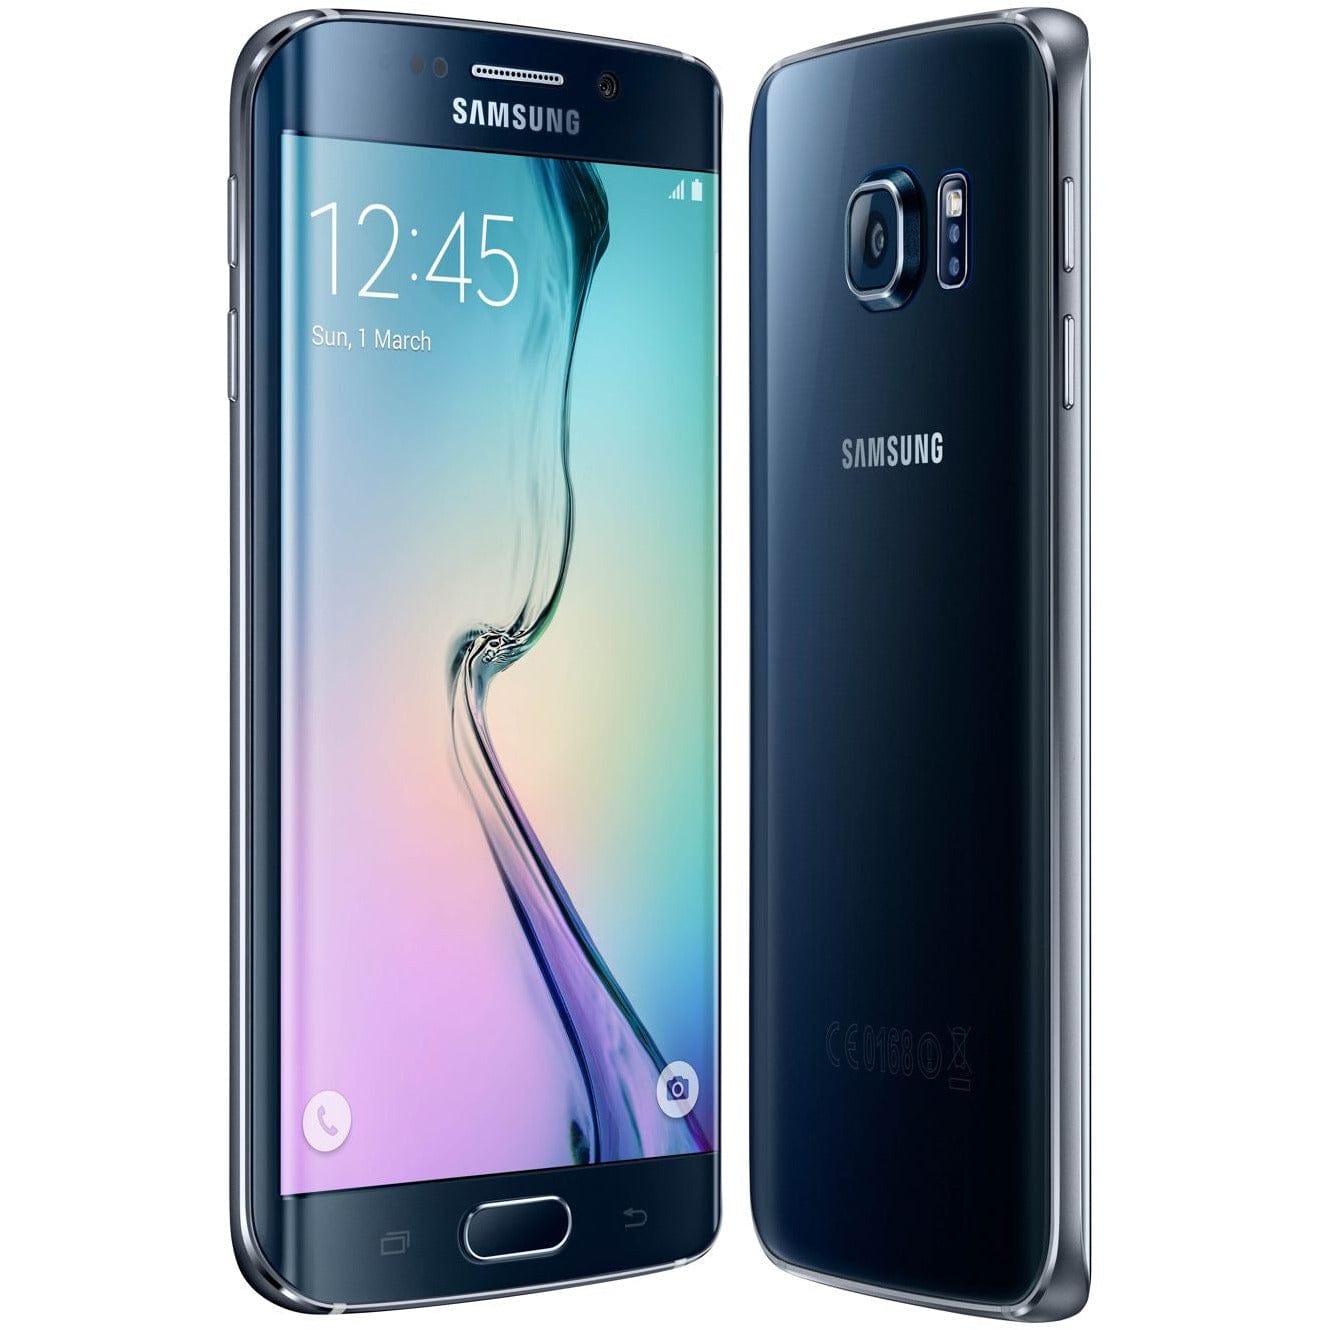 Samsung Galaxy S6 edge G925F - 32 GB - Black Sapphire - Unlocked